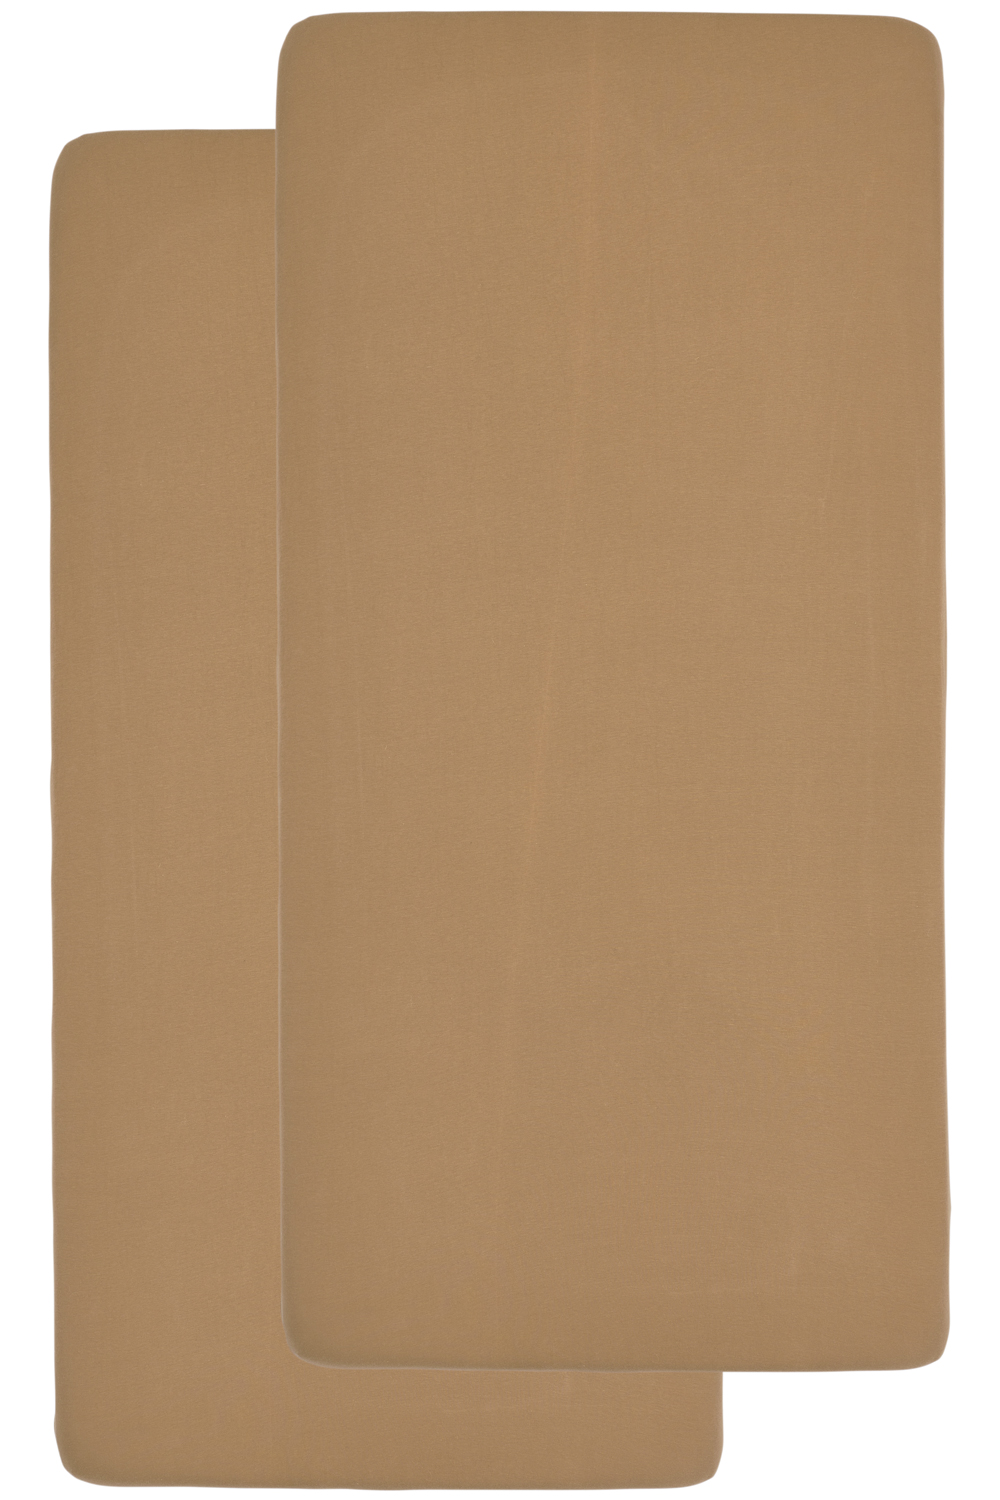 Jersey Hoeslaken Ledikant 2-pack - Toffee - 60x120cm